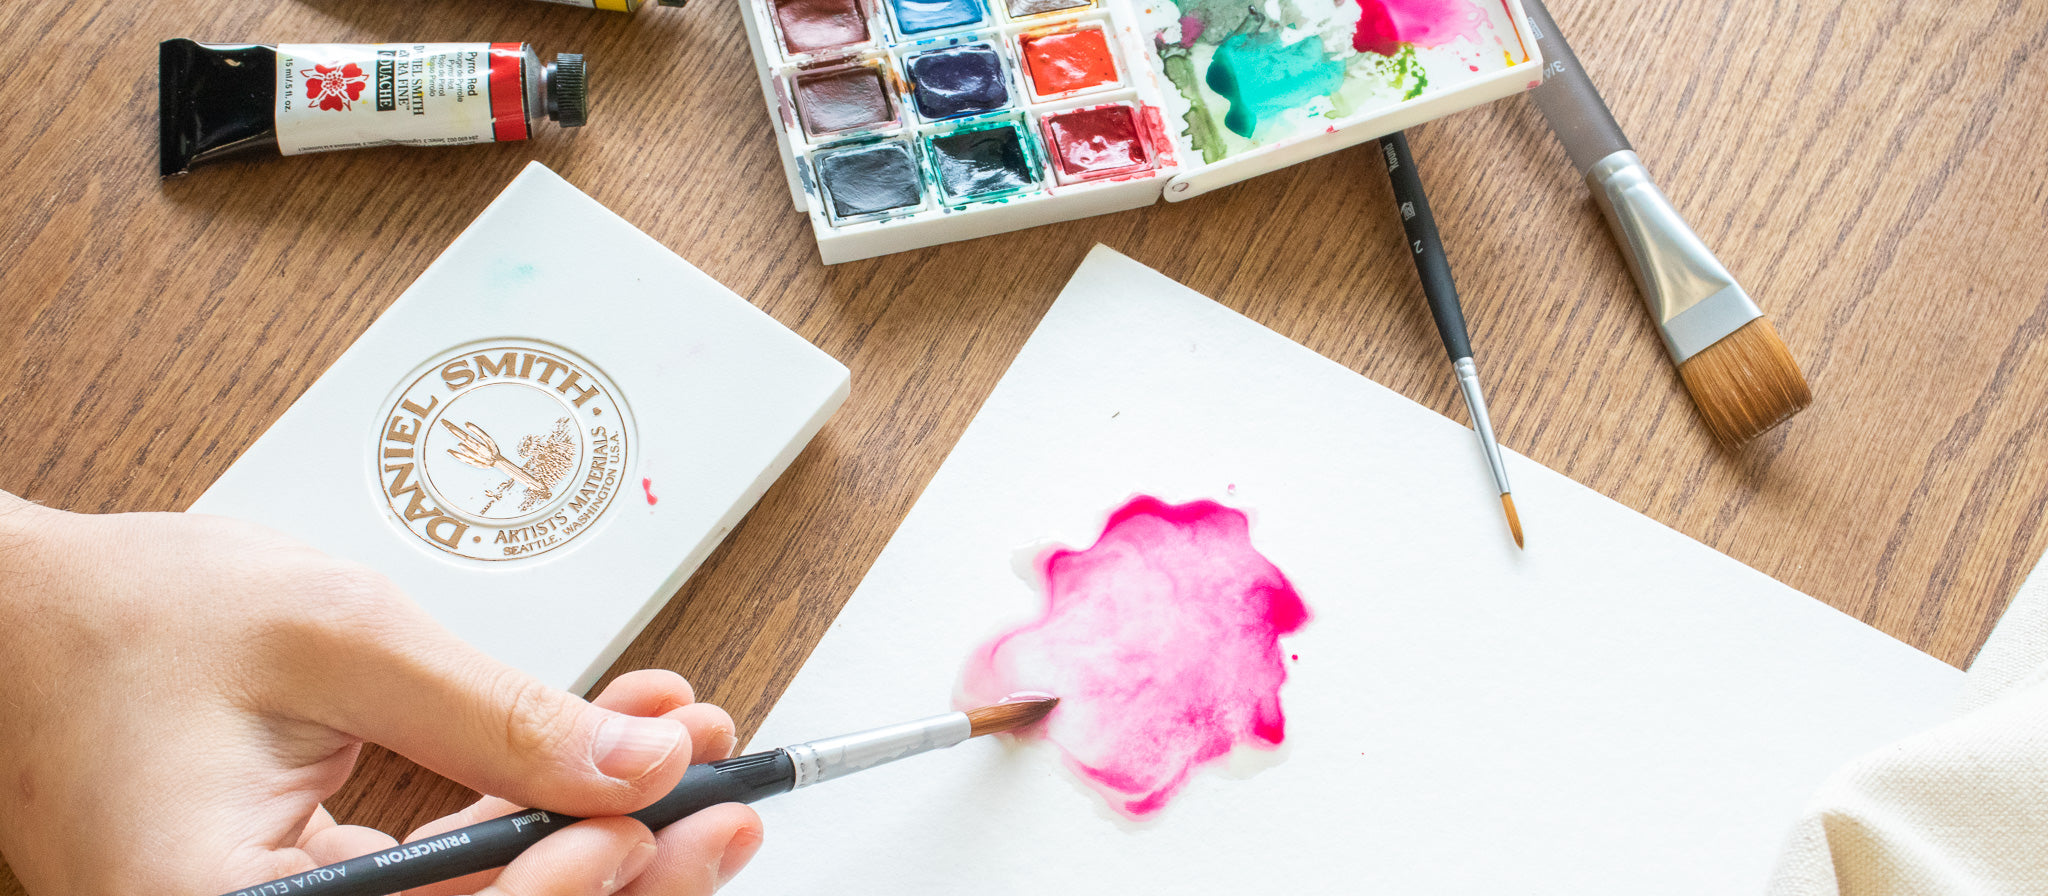 Creative Hobbies 1 7/8 Hake Blender Brush for Watercolor, Wash, Ceramic & Pottery Painting